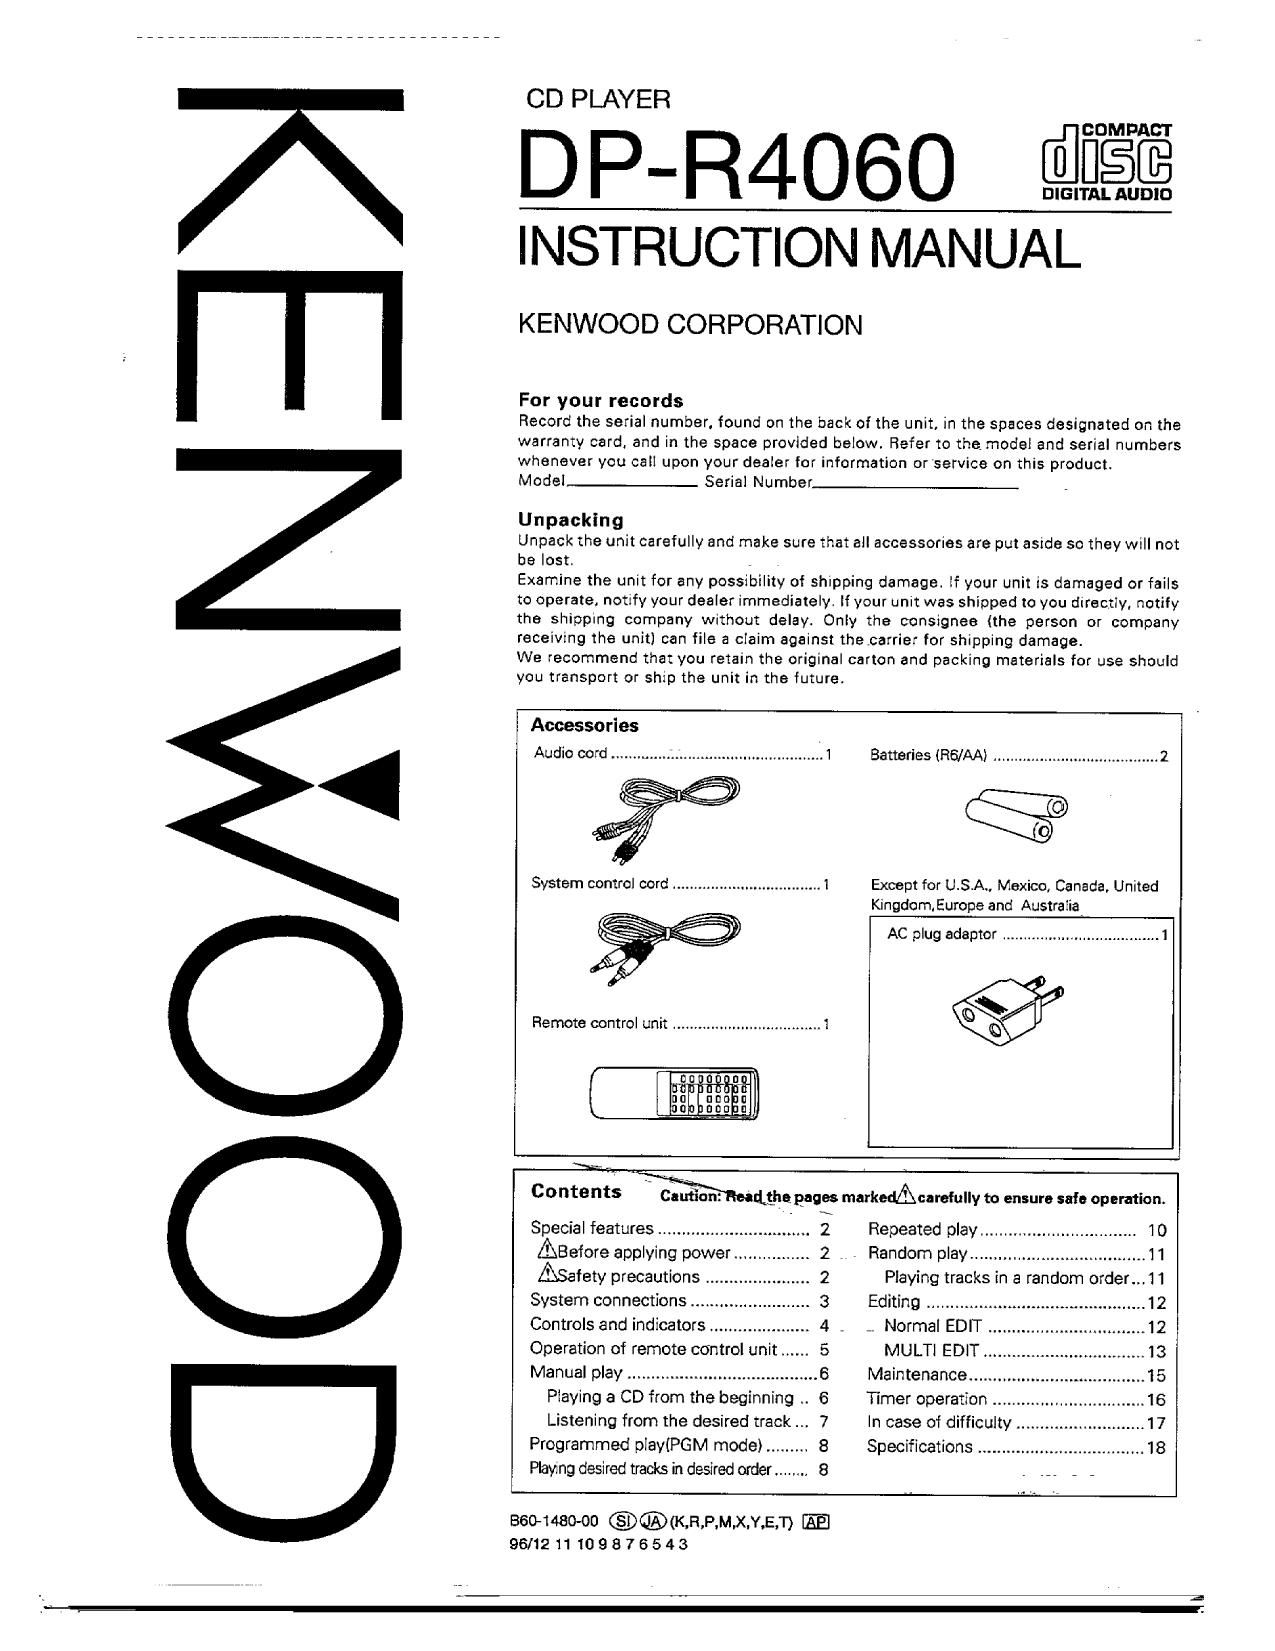 Kenwood DPR 4060 Owners Manual